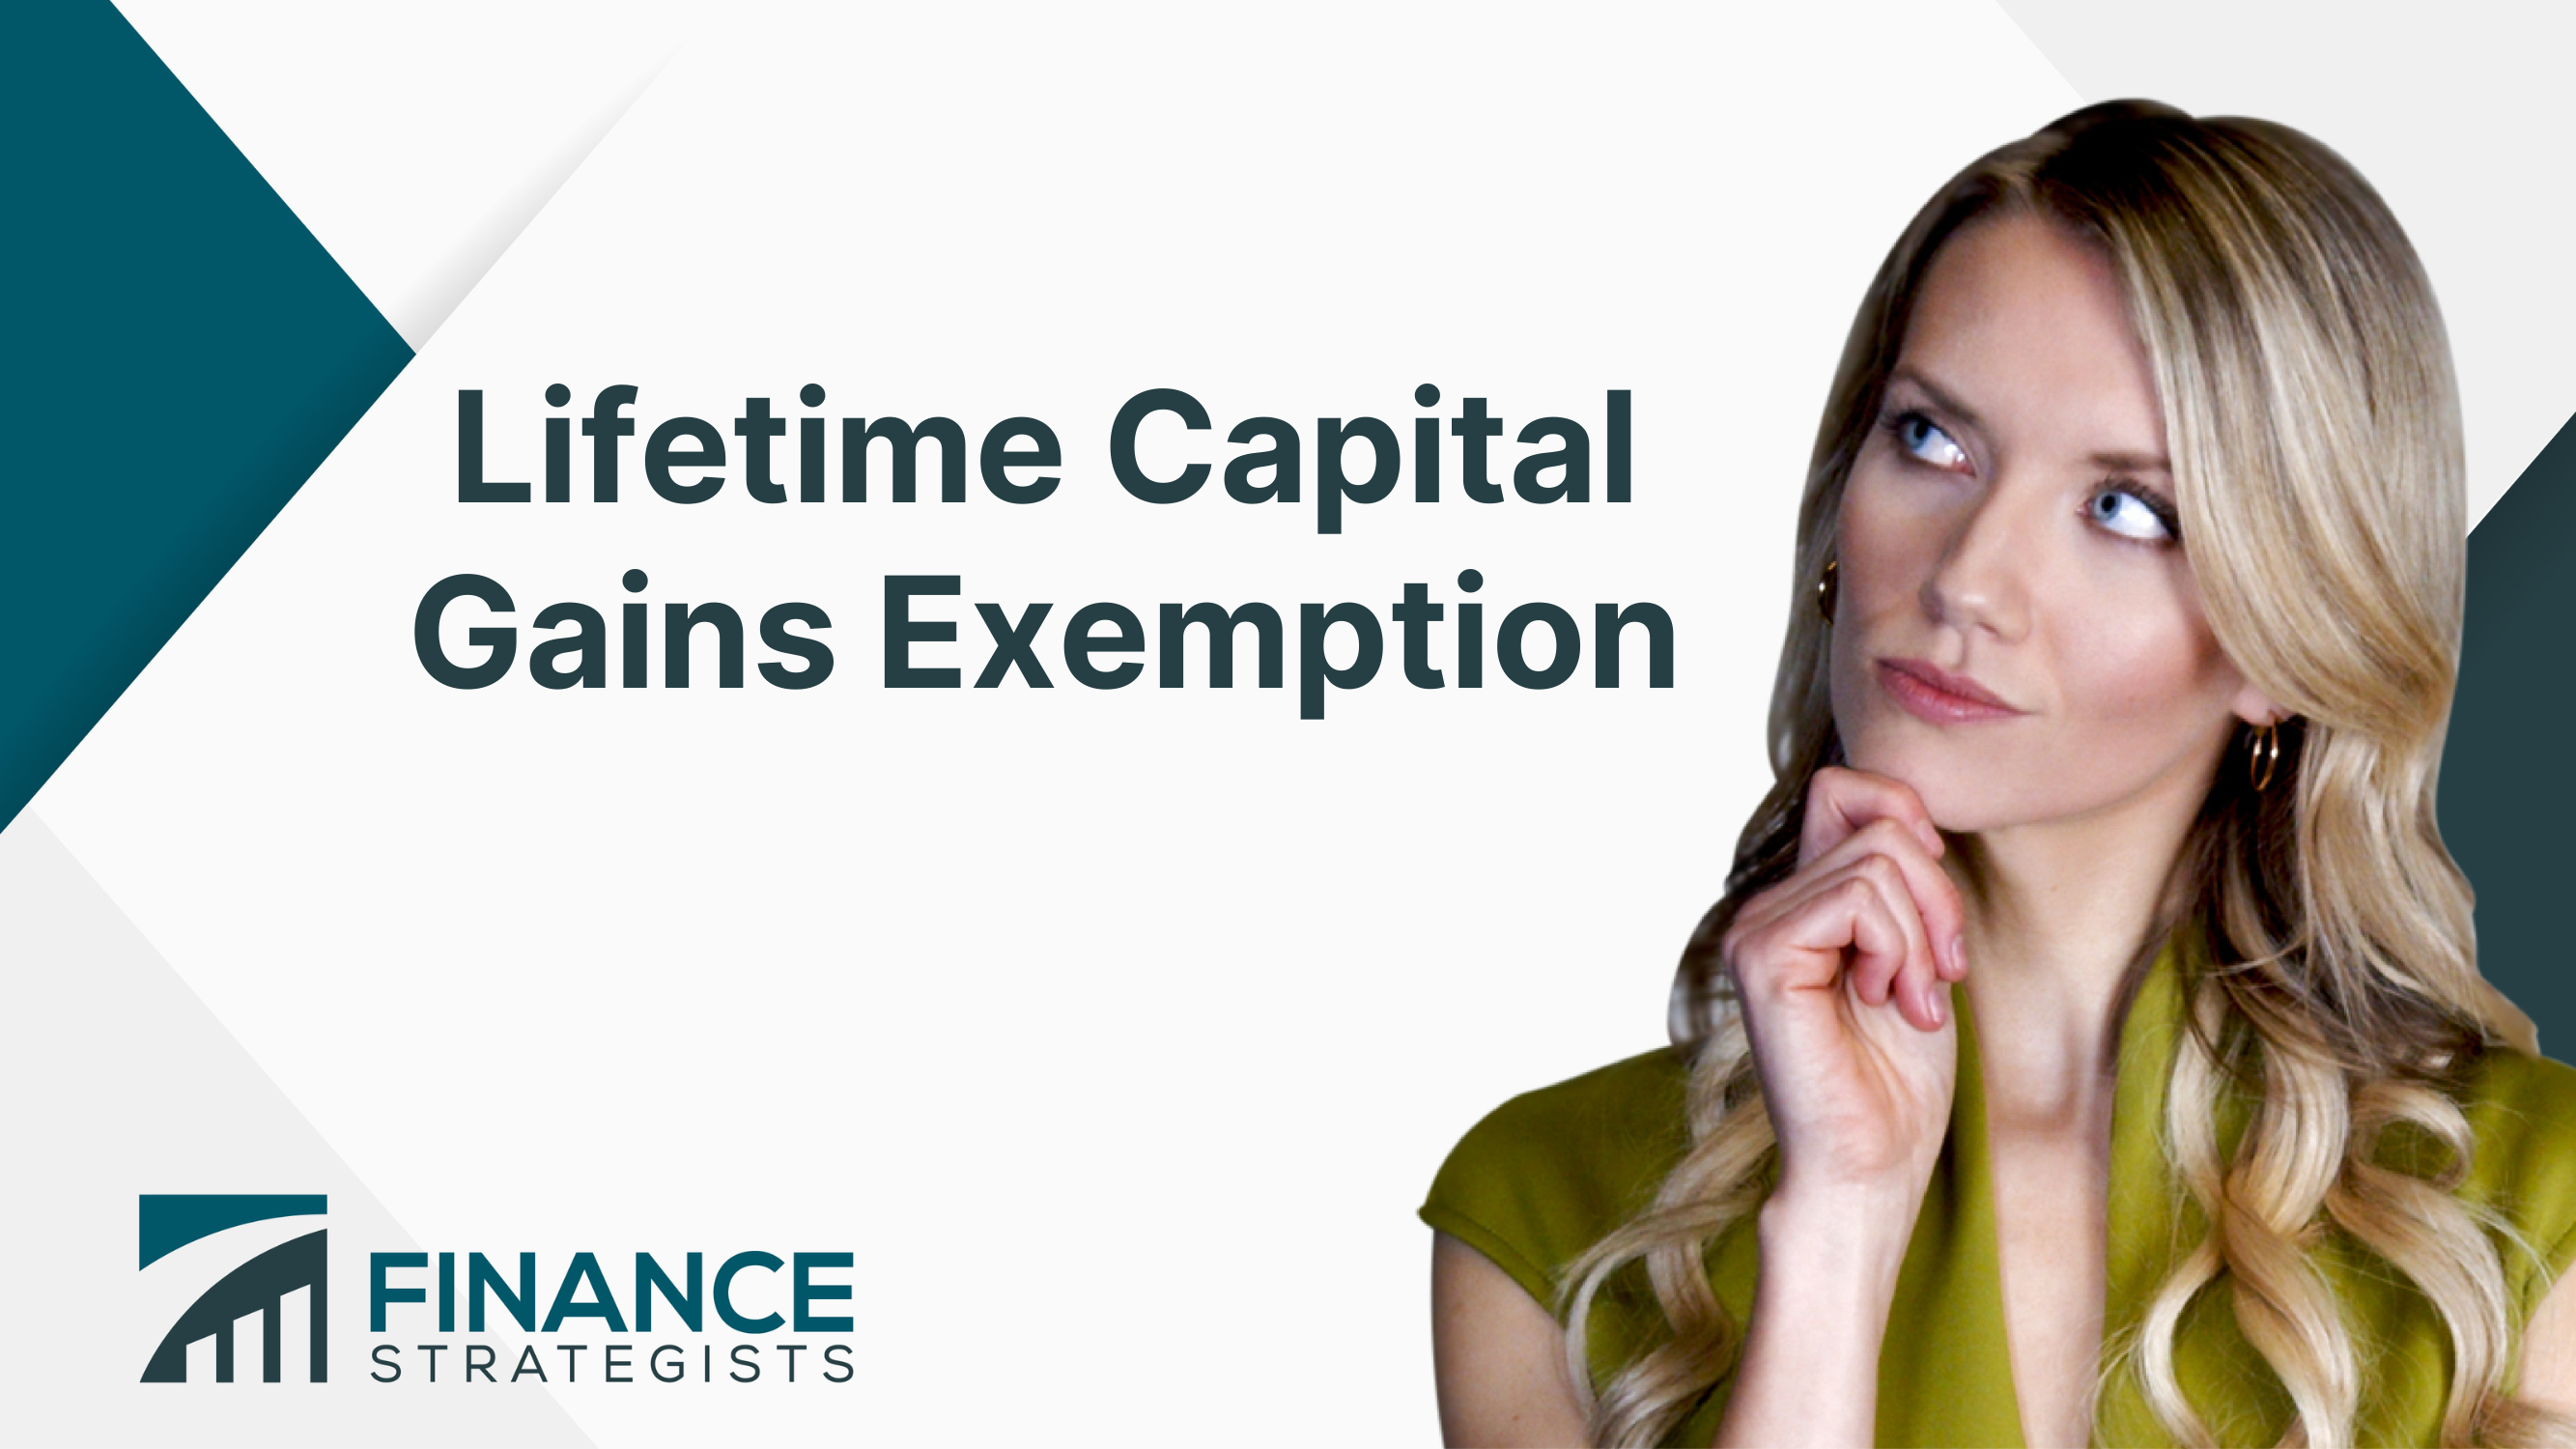 Lifetime Capital Gains Exemption Definition, Calculation, Uses